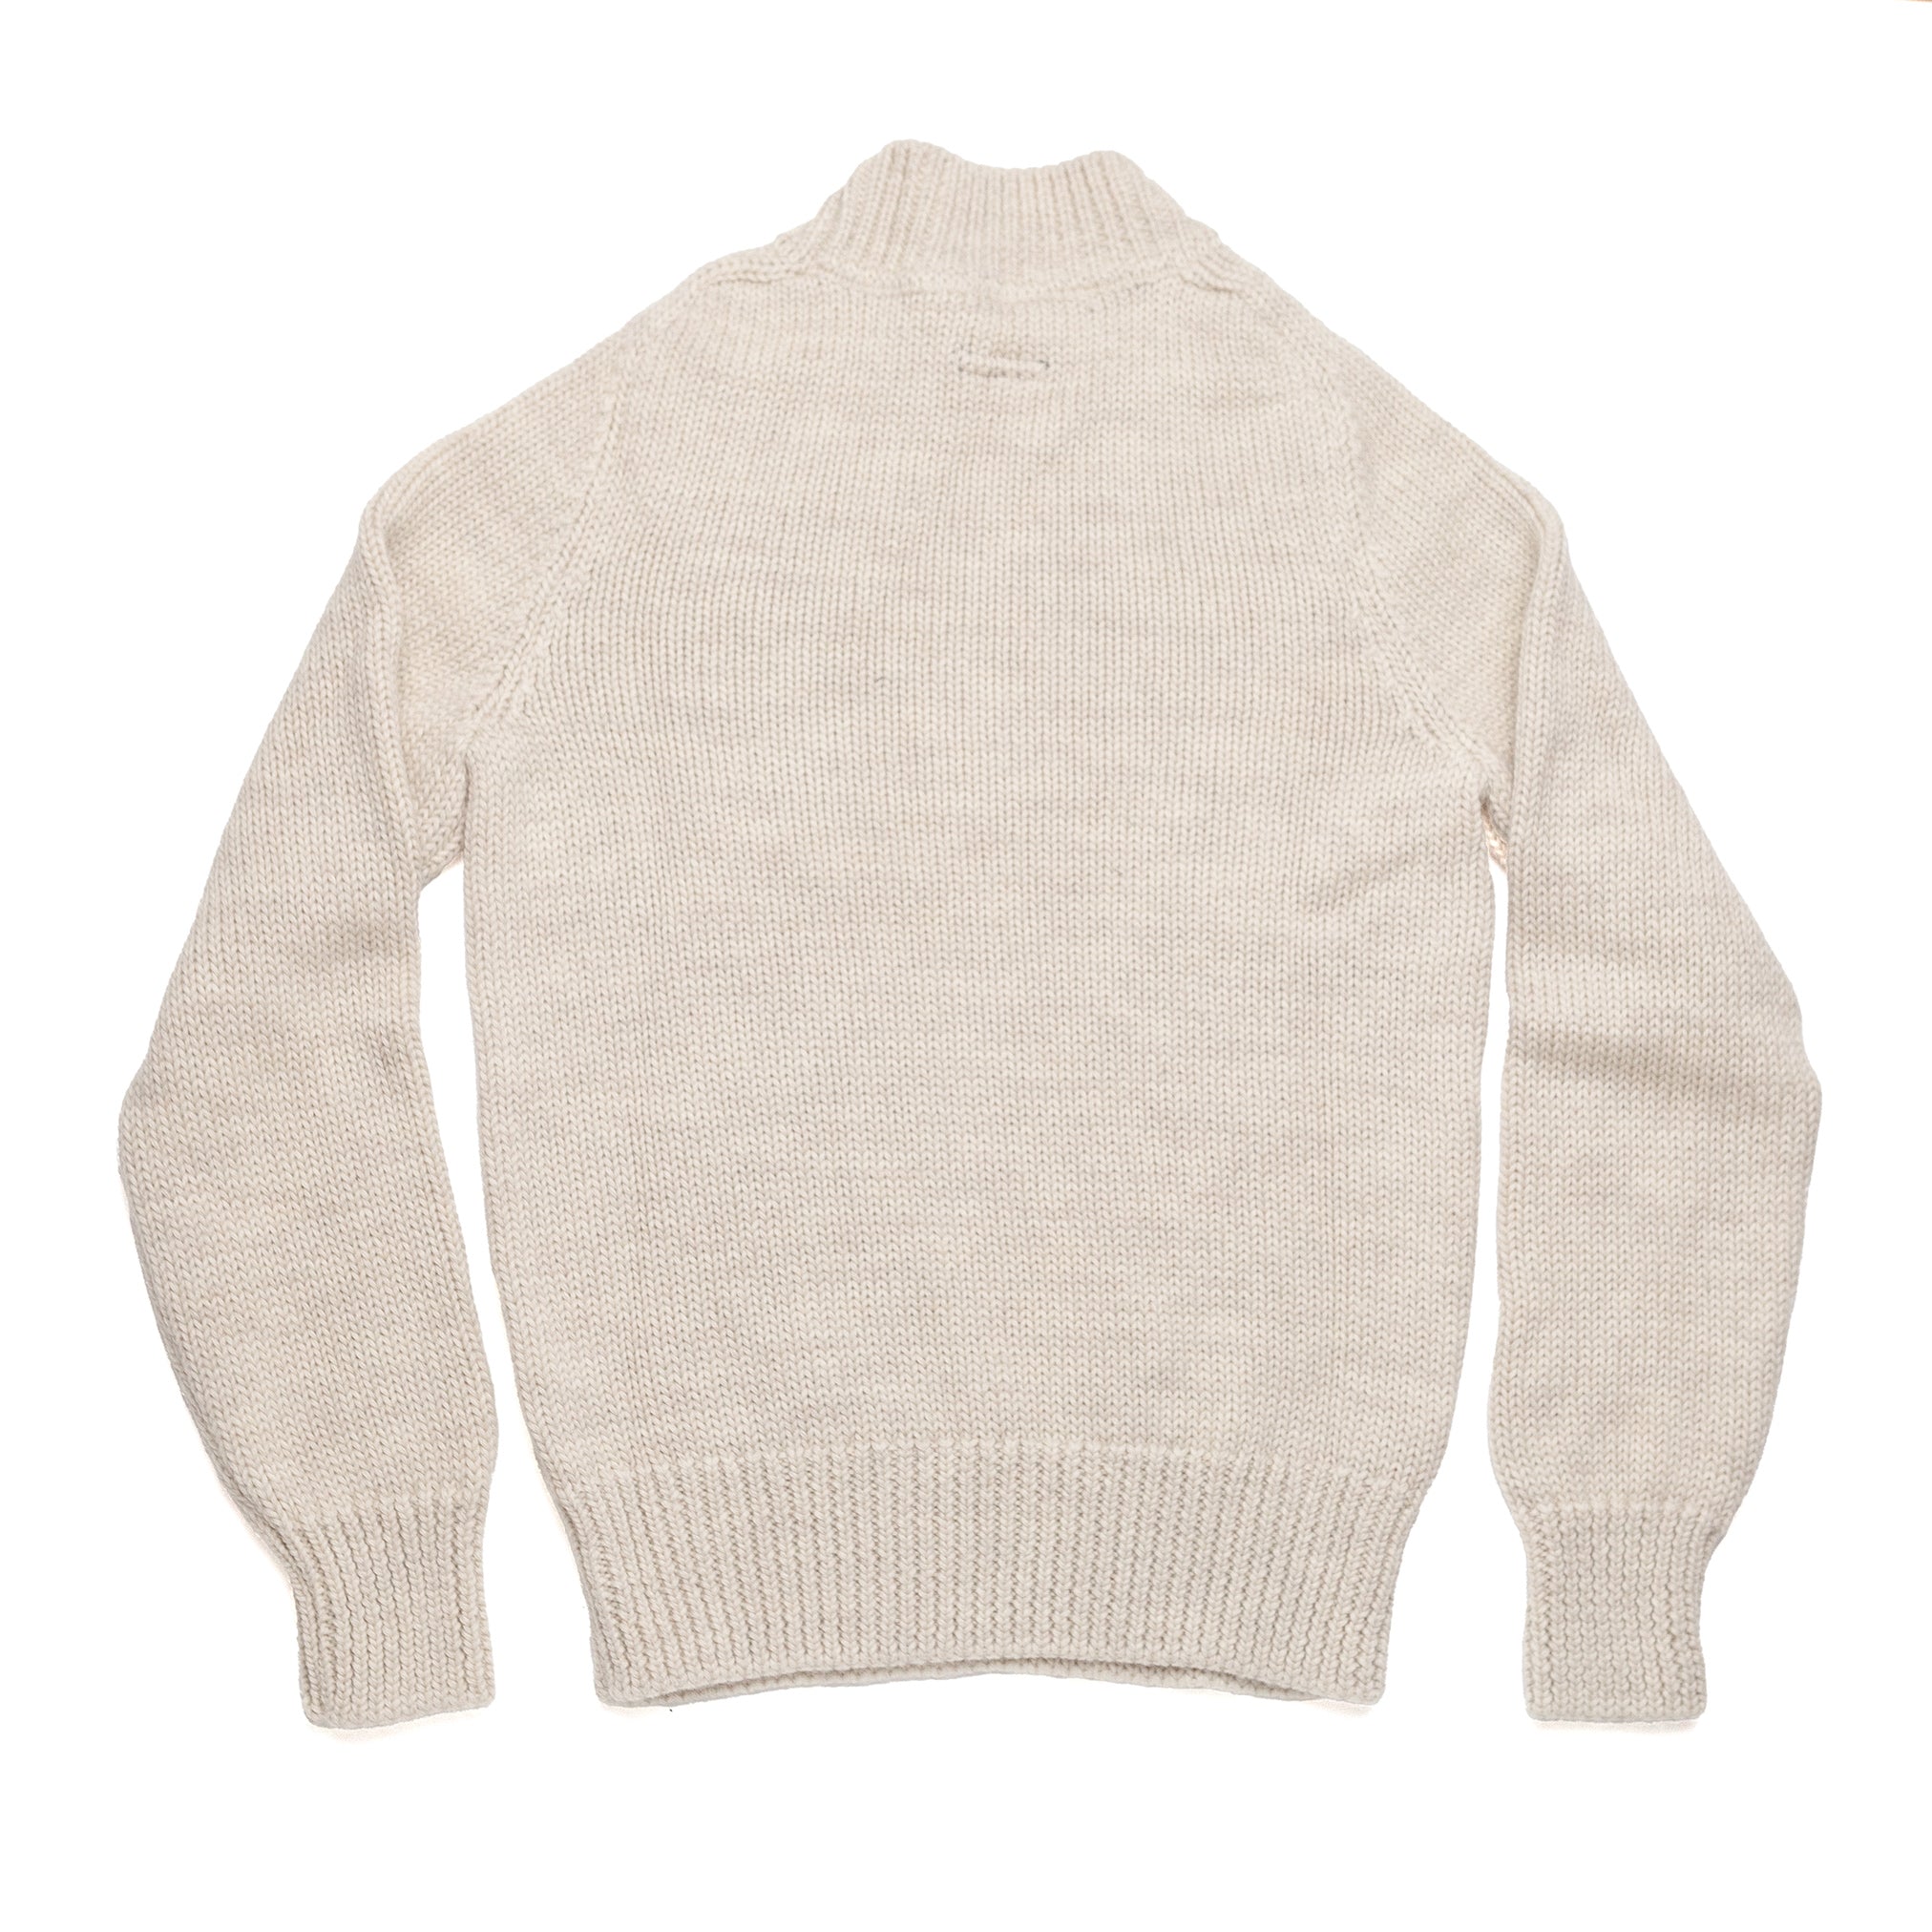 The Orlock Sweater